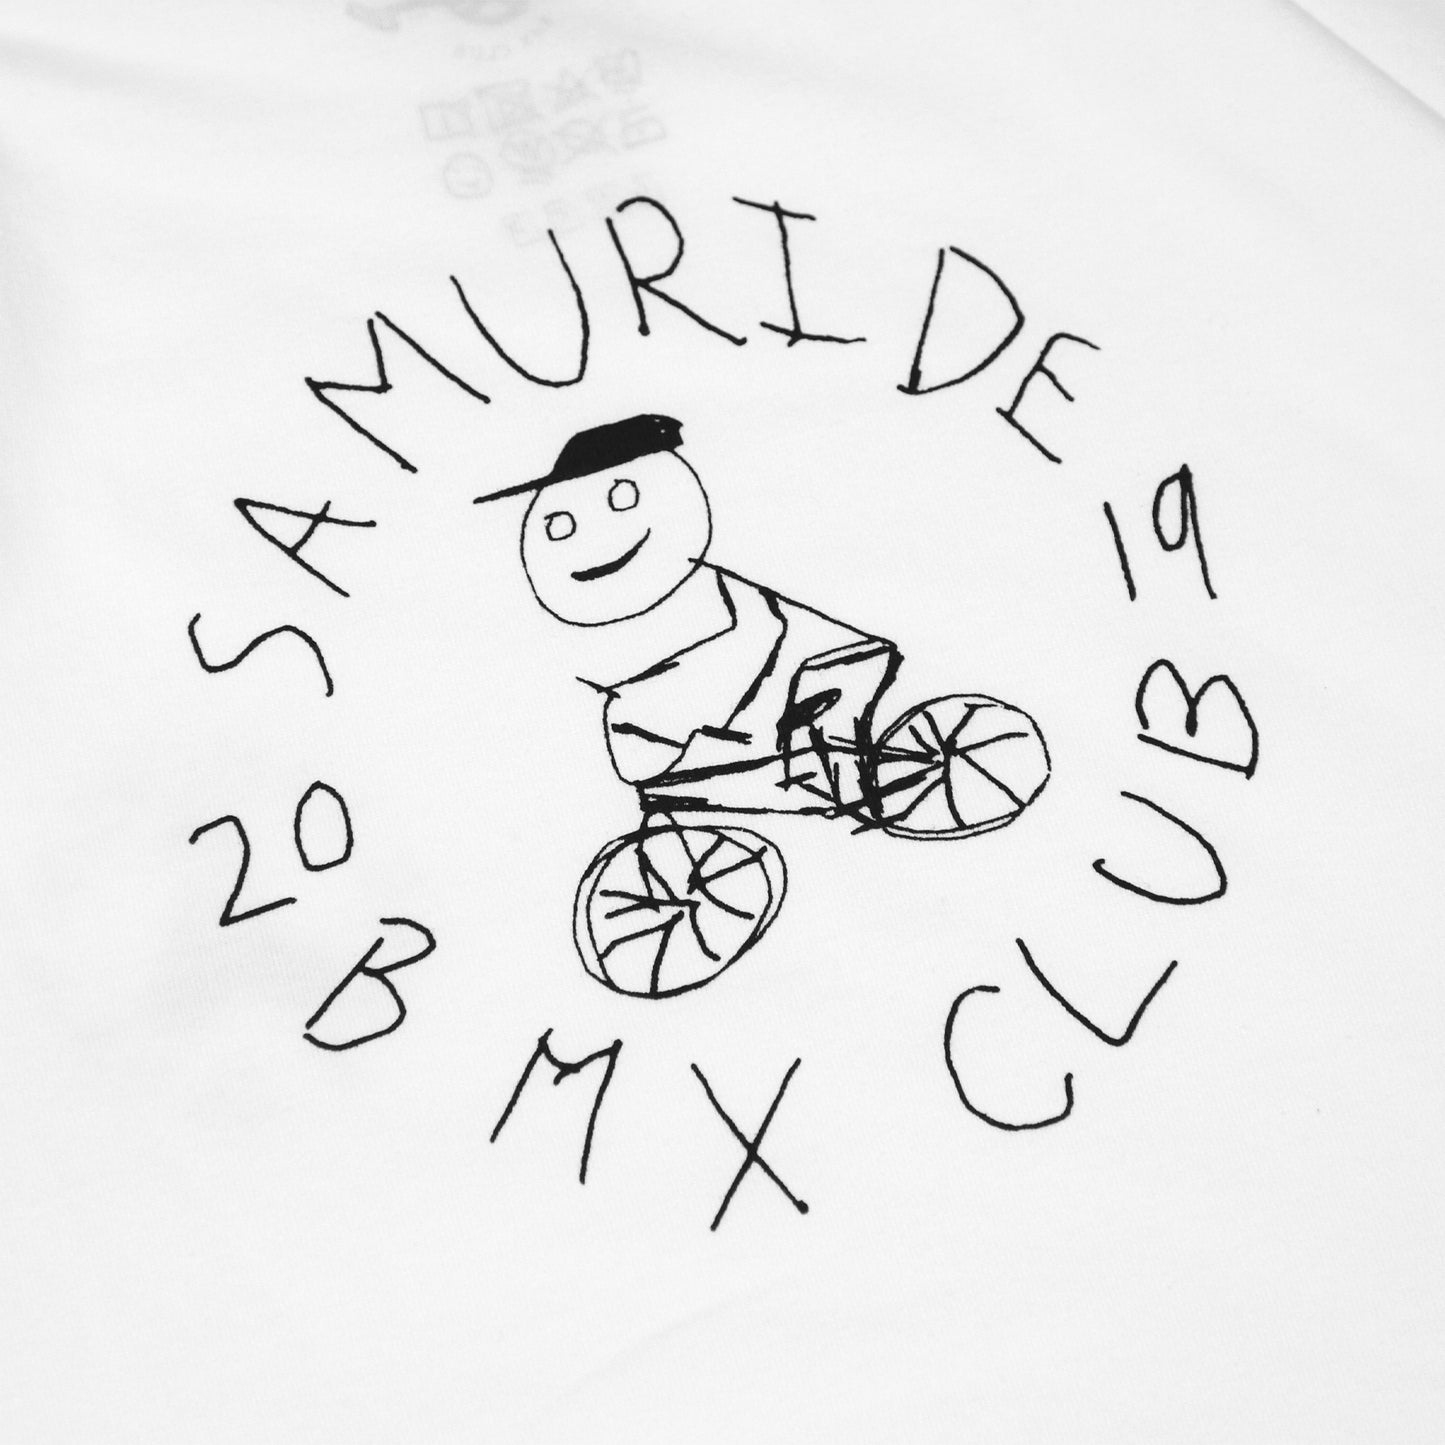 SAMURIDE - SMRD Stickman T-Shirt/Black & White